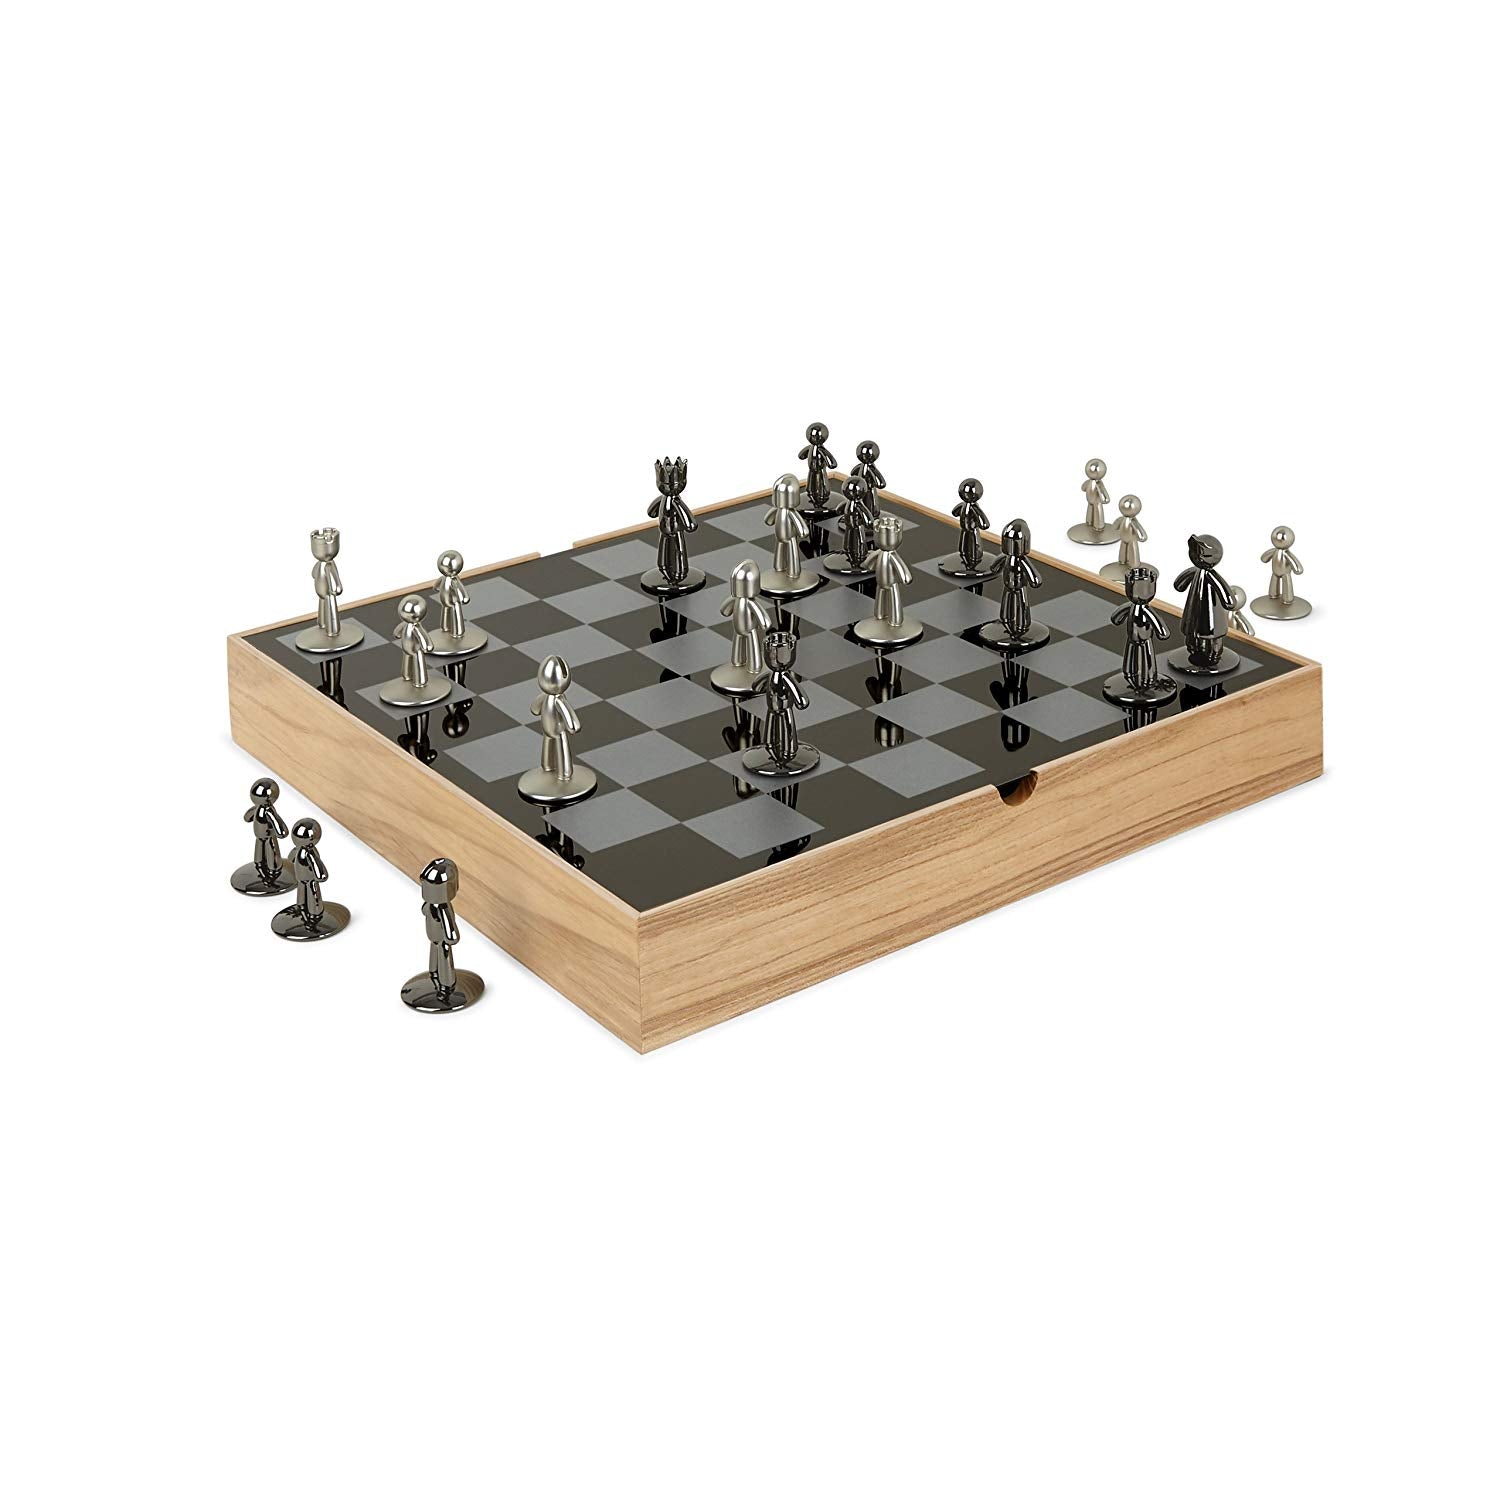 Umbra Buddy Deluxe Chess Set